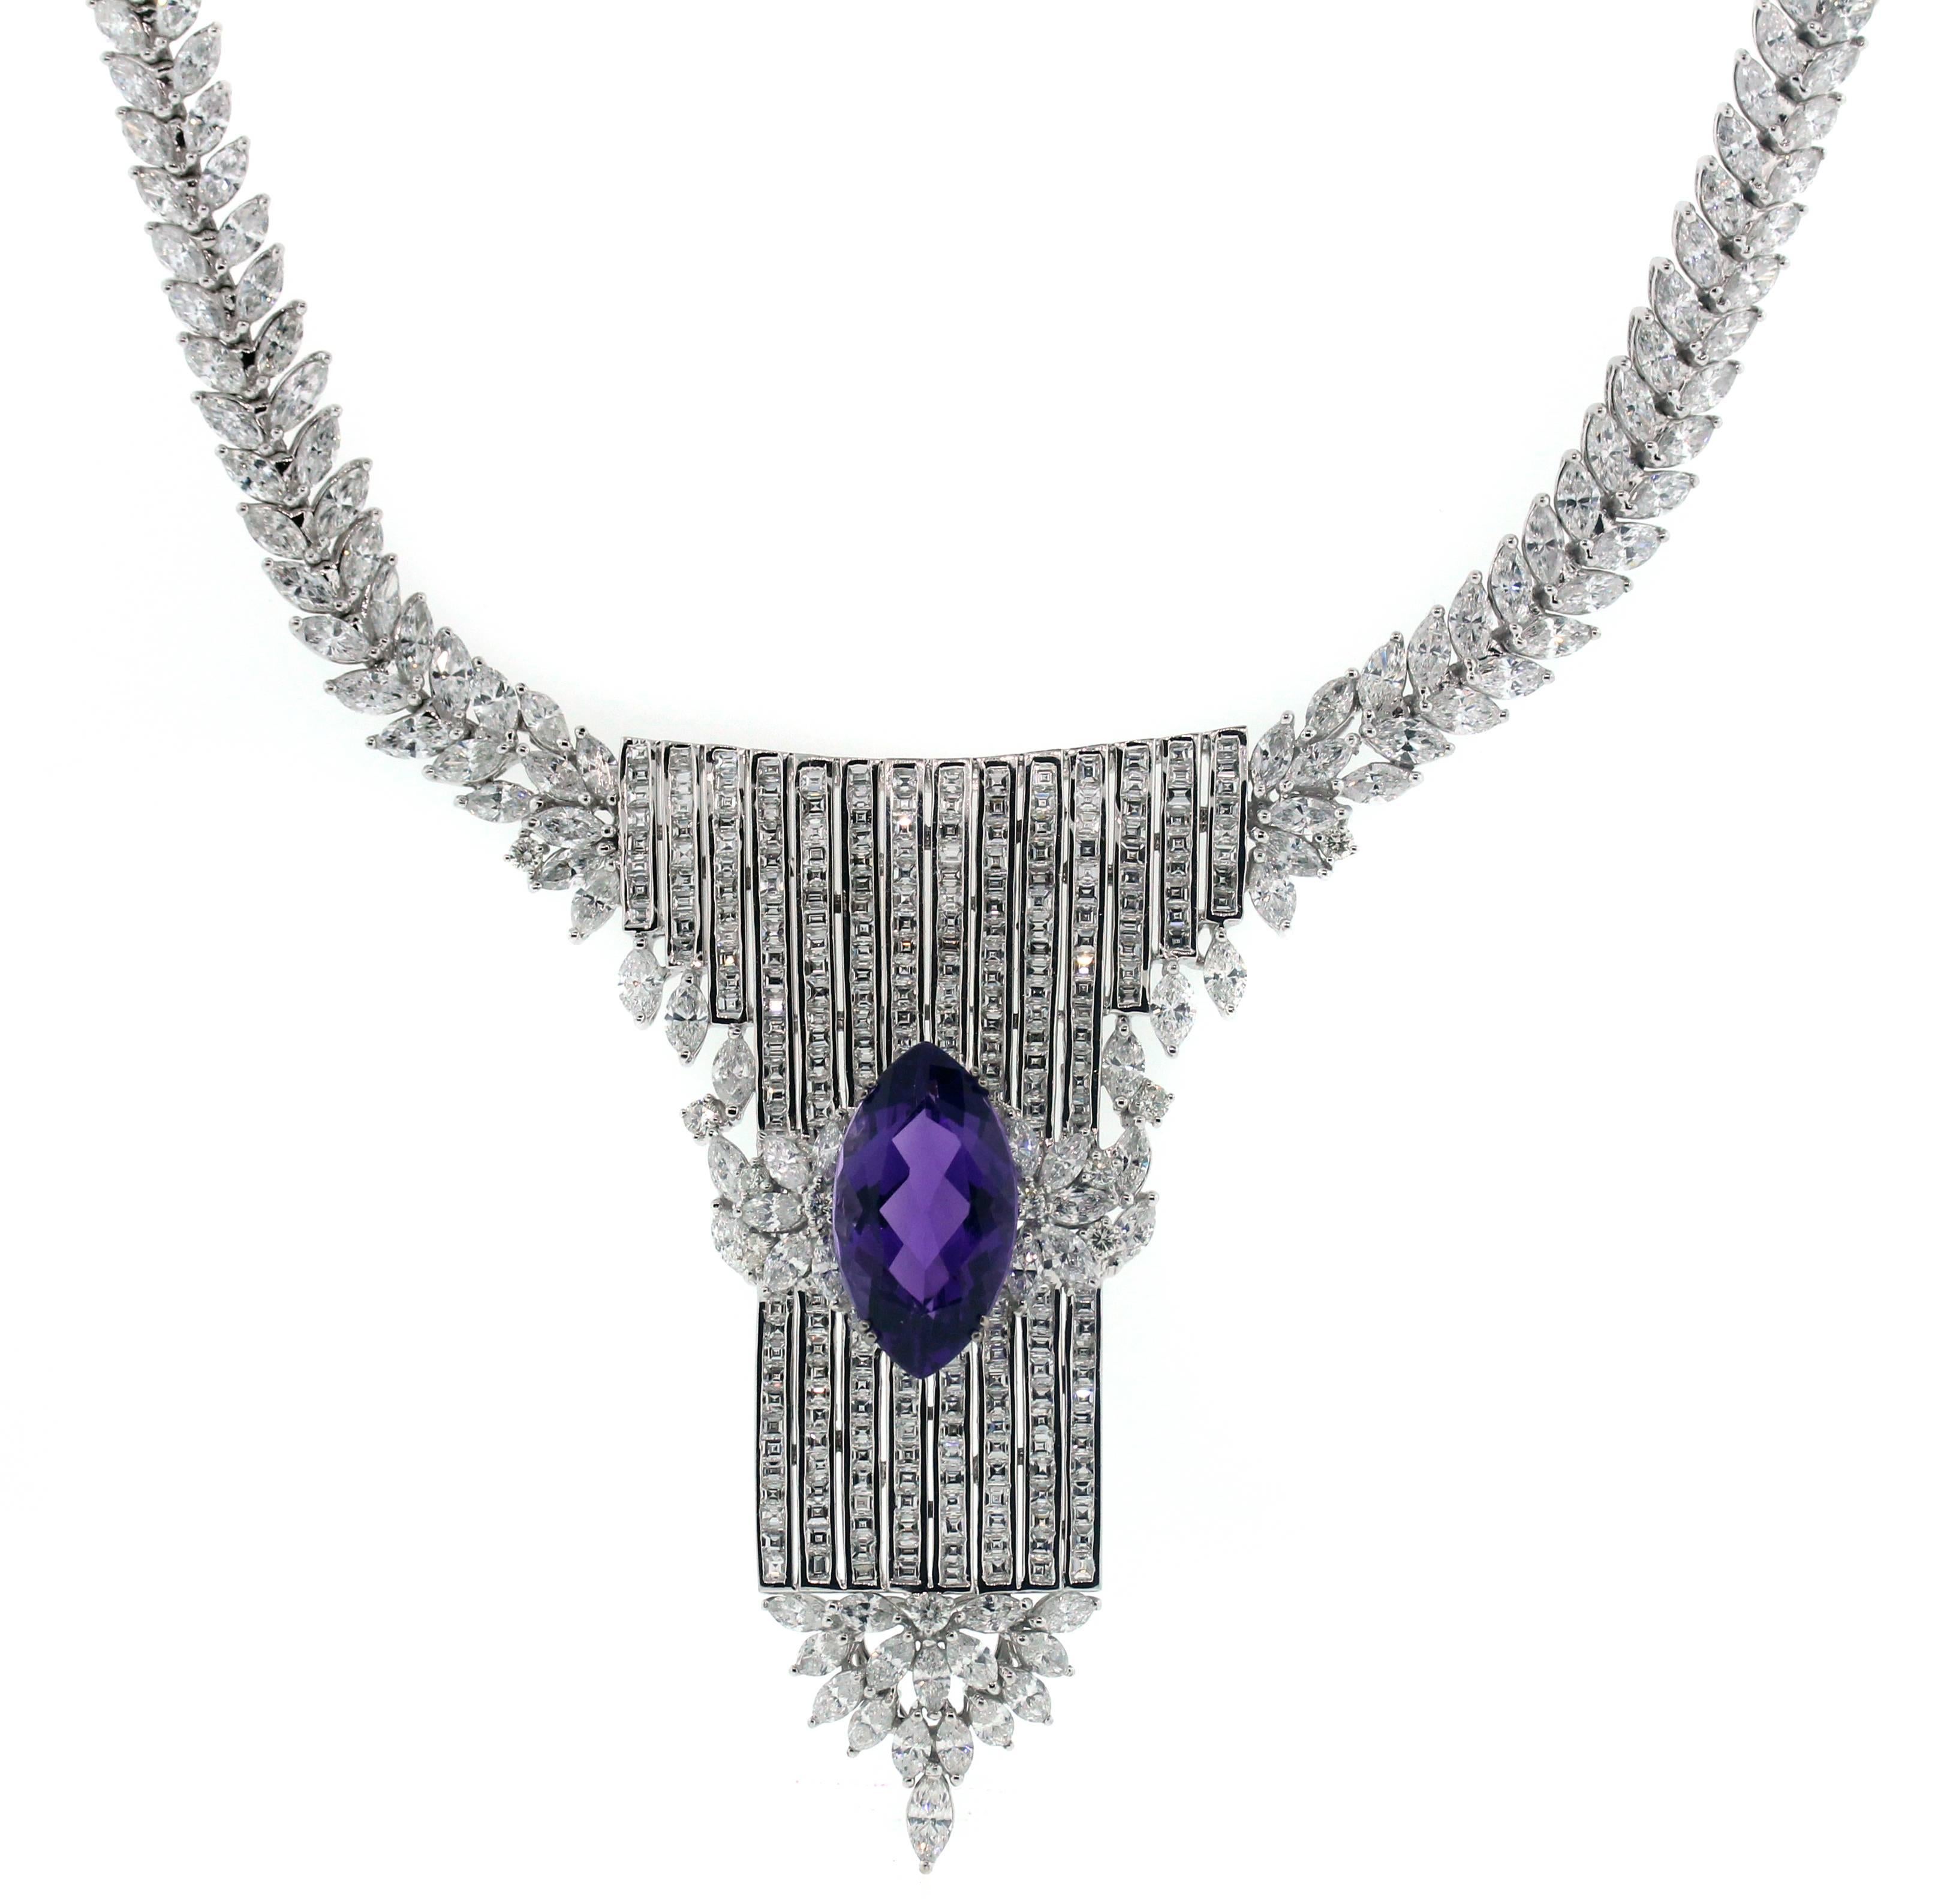 55 Carat Diamond and Amethyst Necklace